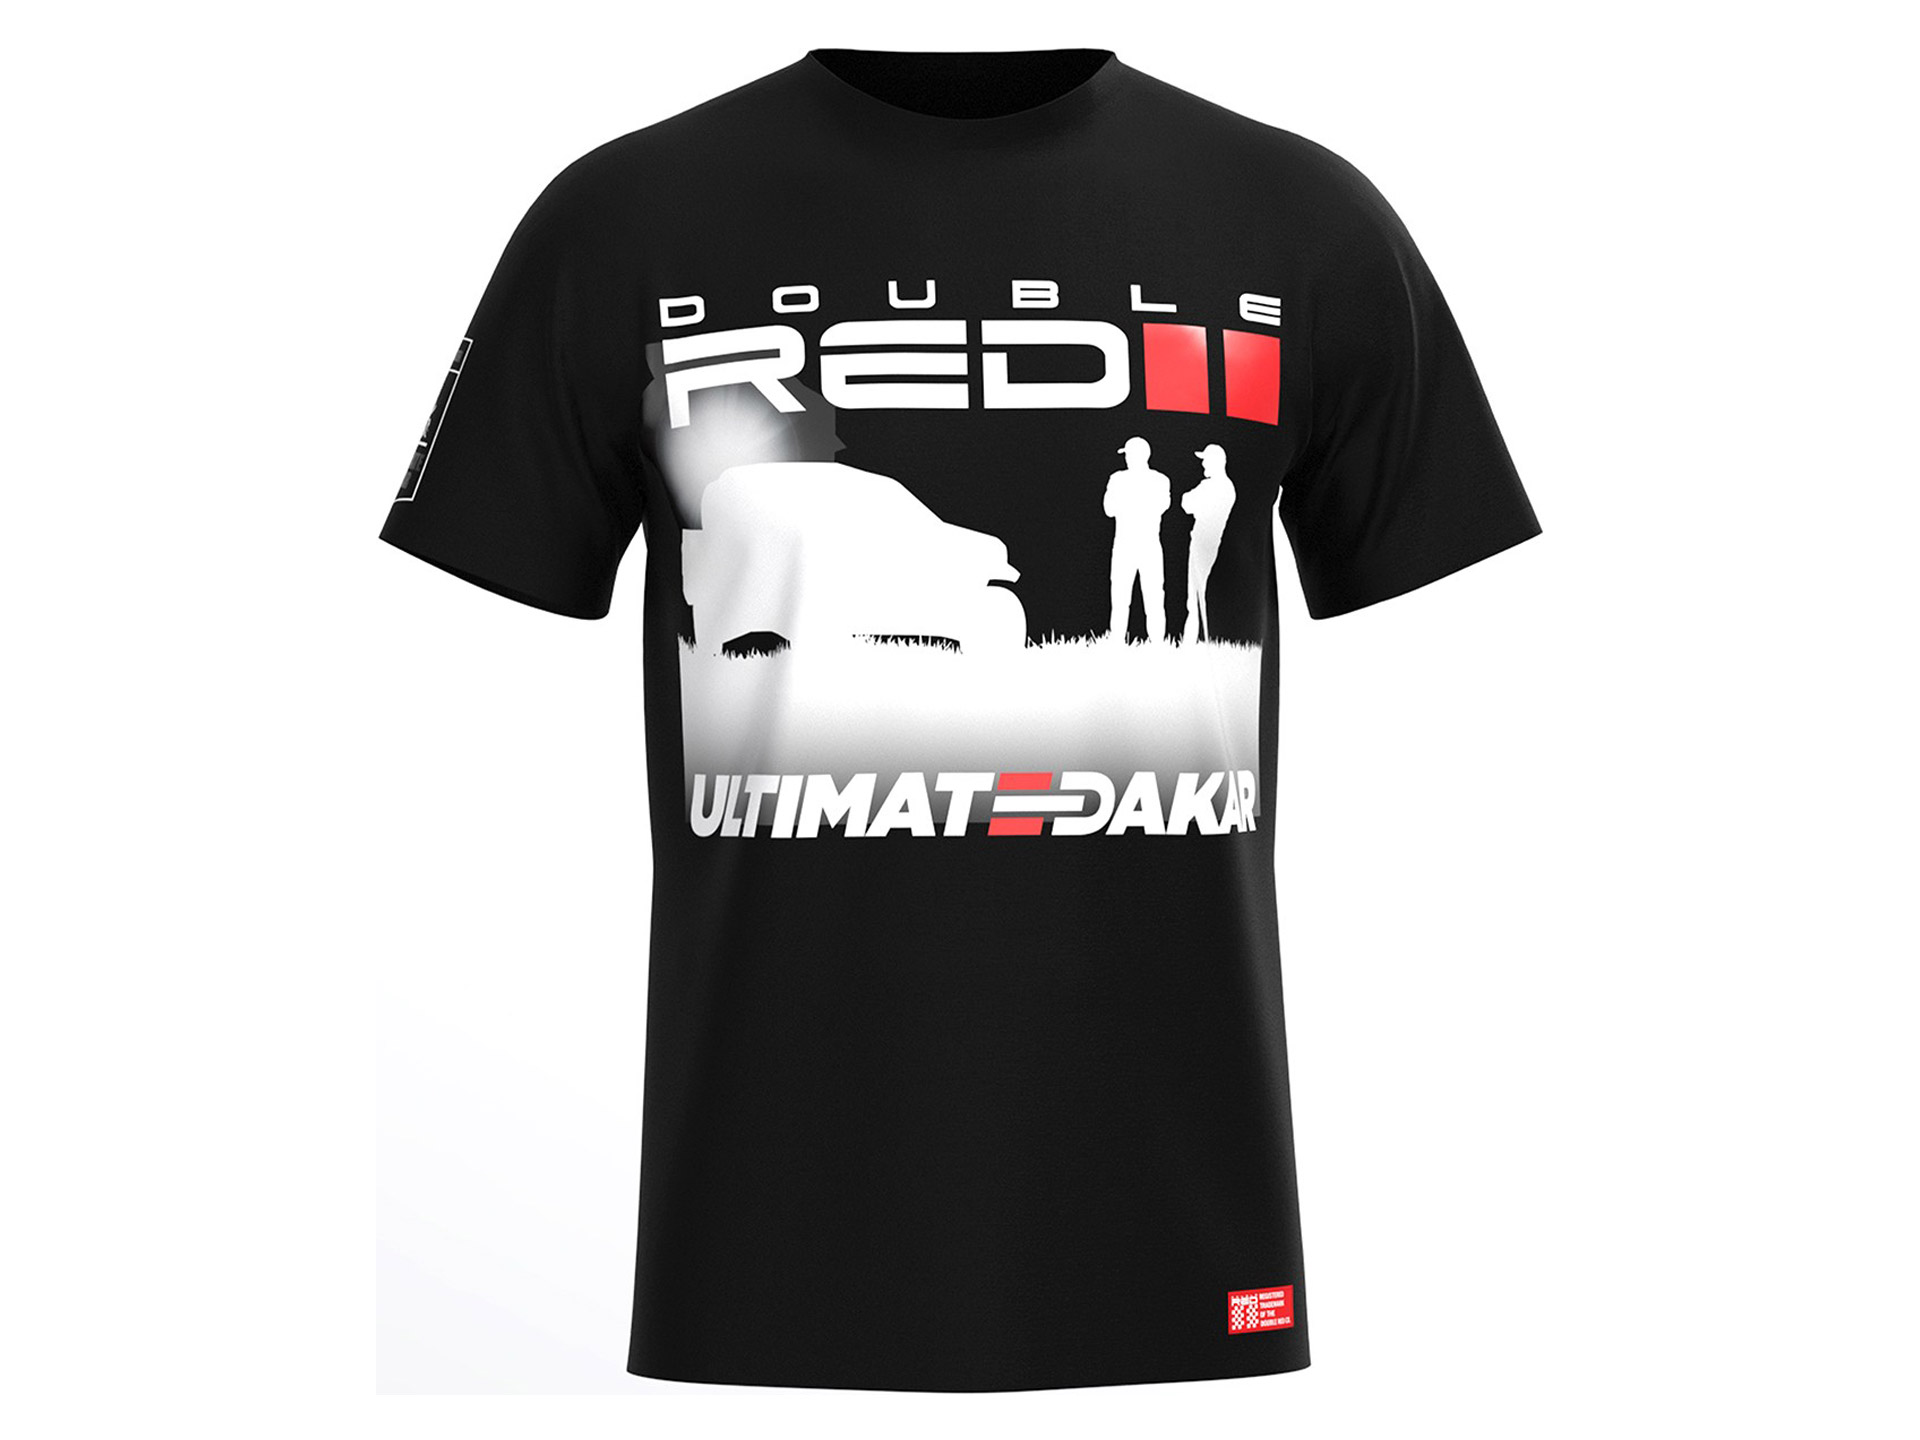 Obrázek galerie Tričko Ultimate Dakar Racing – Kolekce Double Red 2021 – Unisex černá – XXL